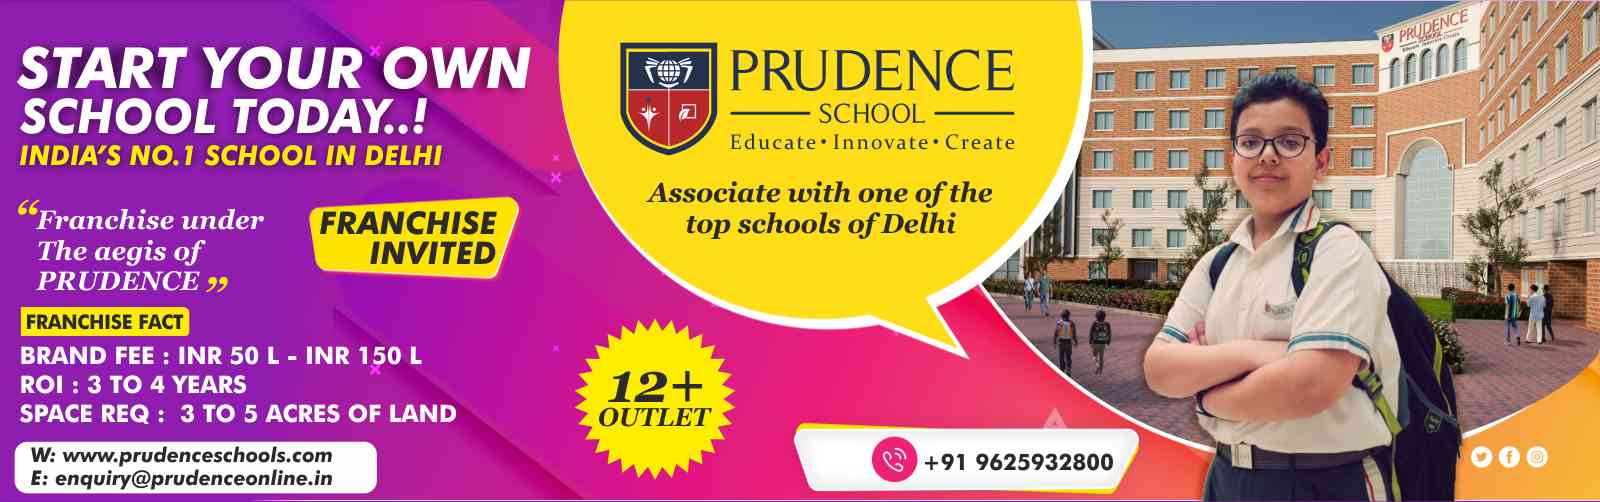 admin/uploads/brand_registration/Prudence School (India's No.1 School Franchise Opportunity)